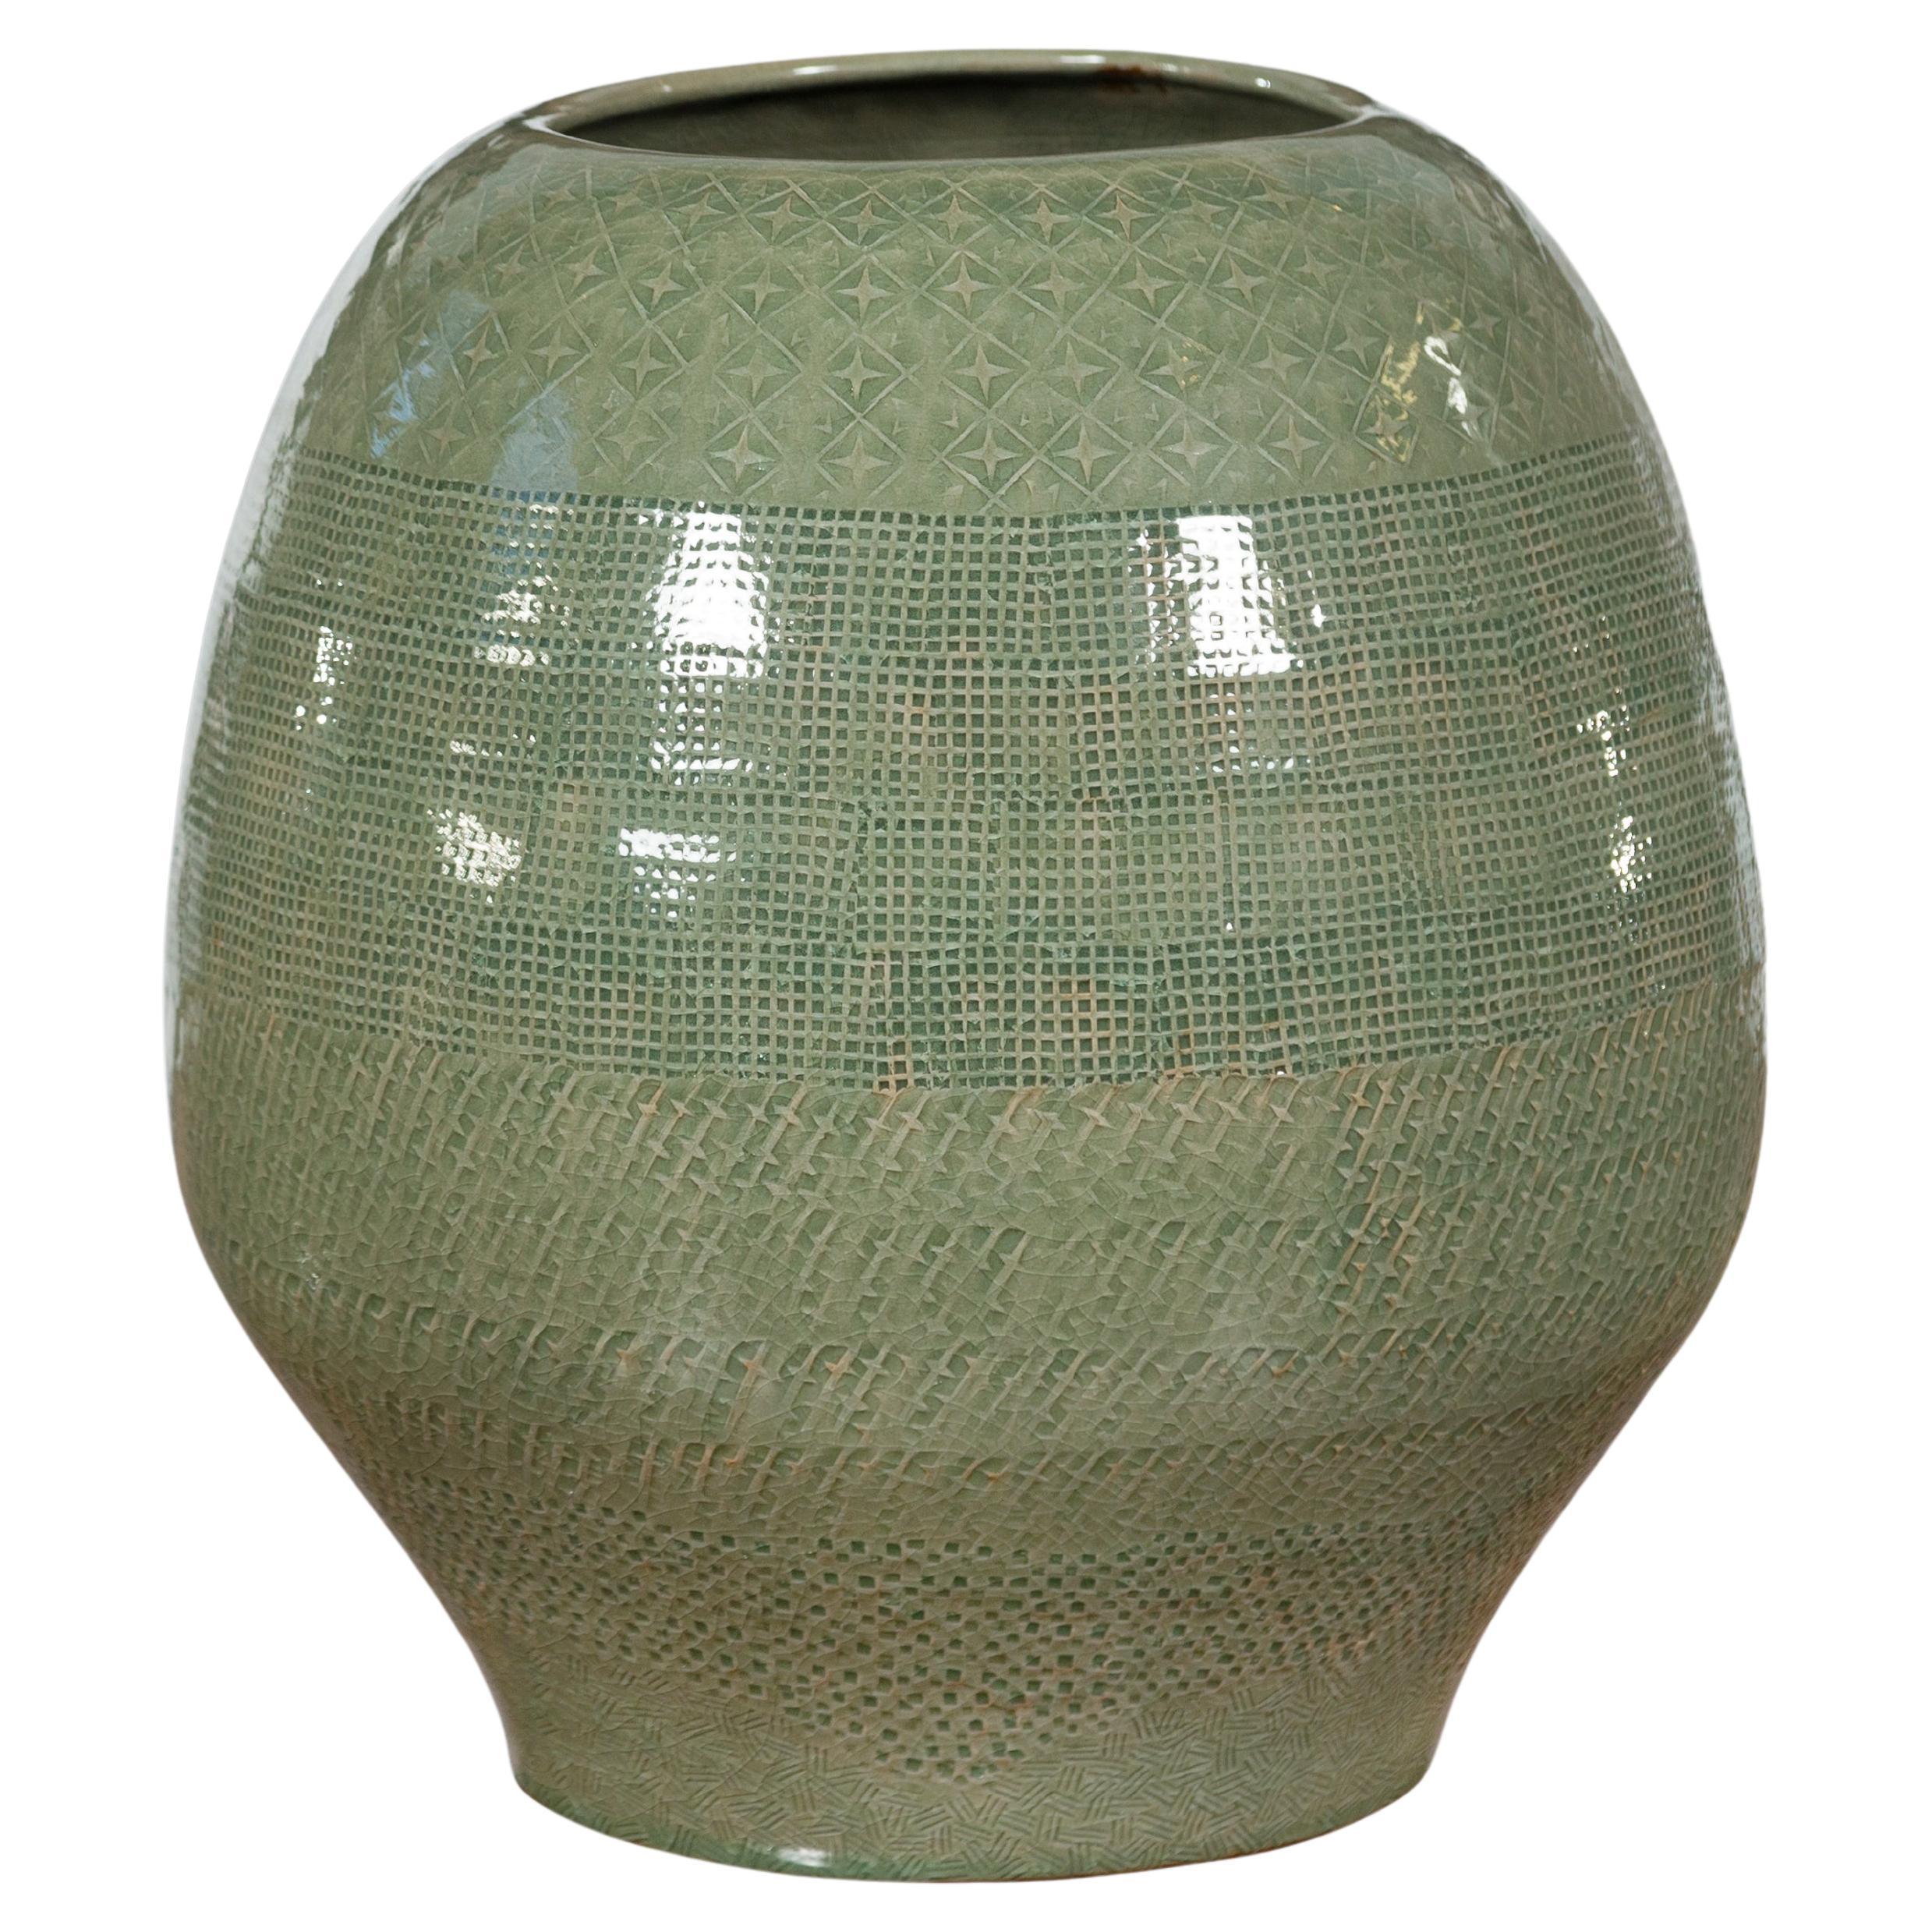 Prem Collection Green Glazed Ceramic Artisan Vase with Geometric Décor